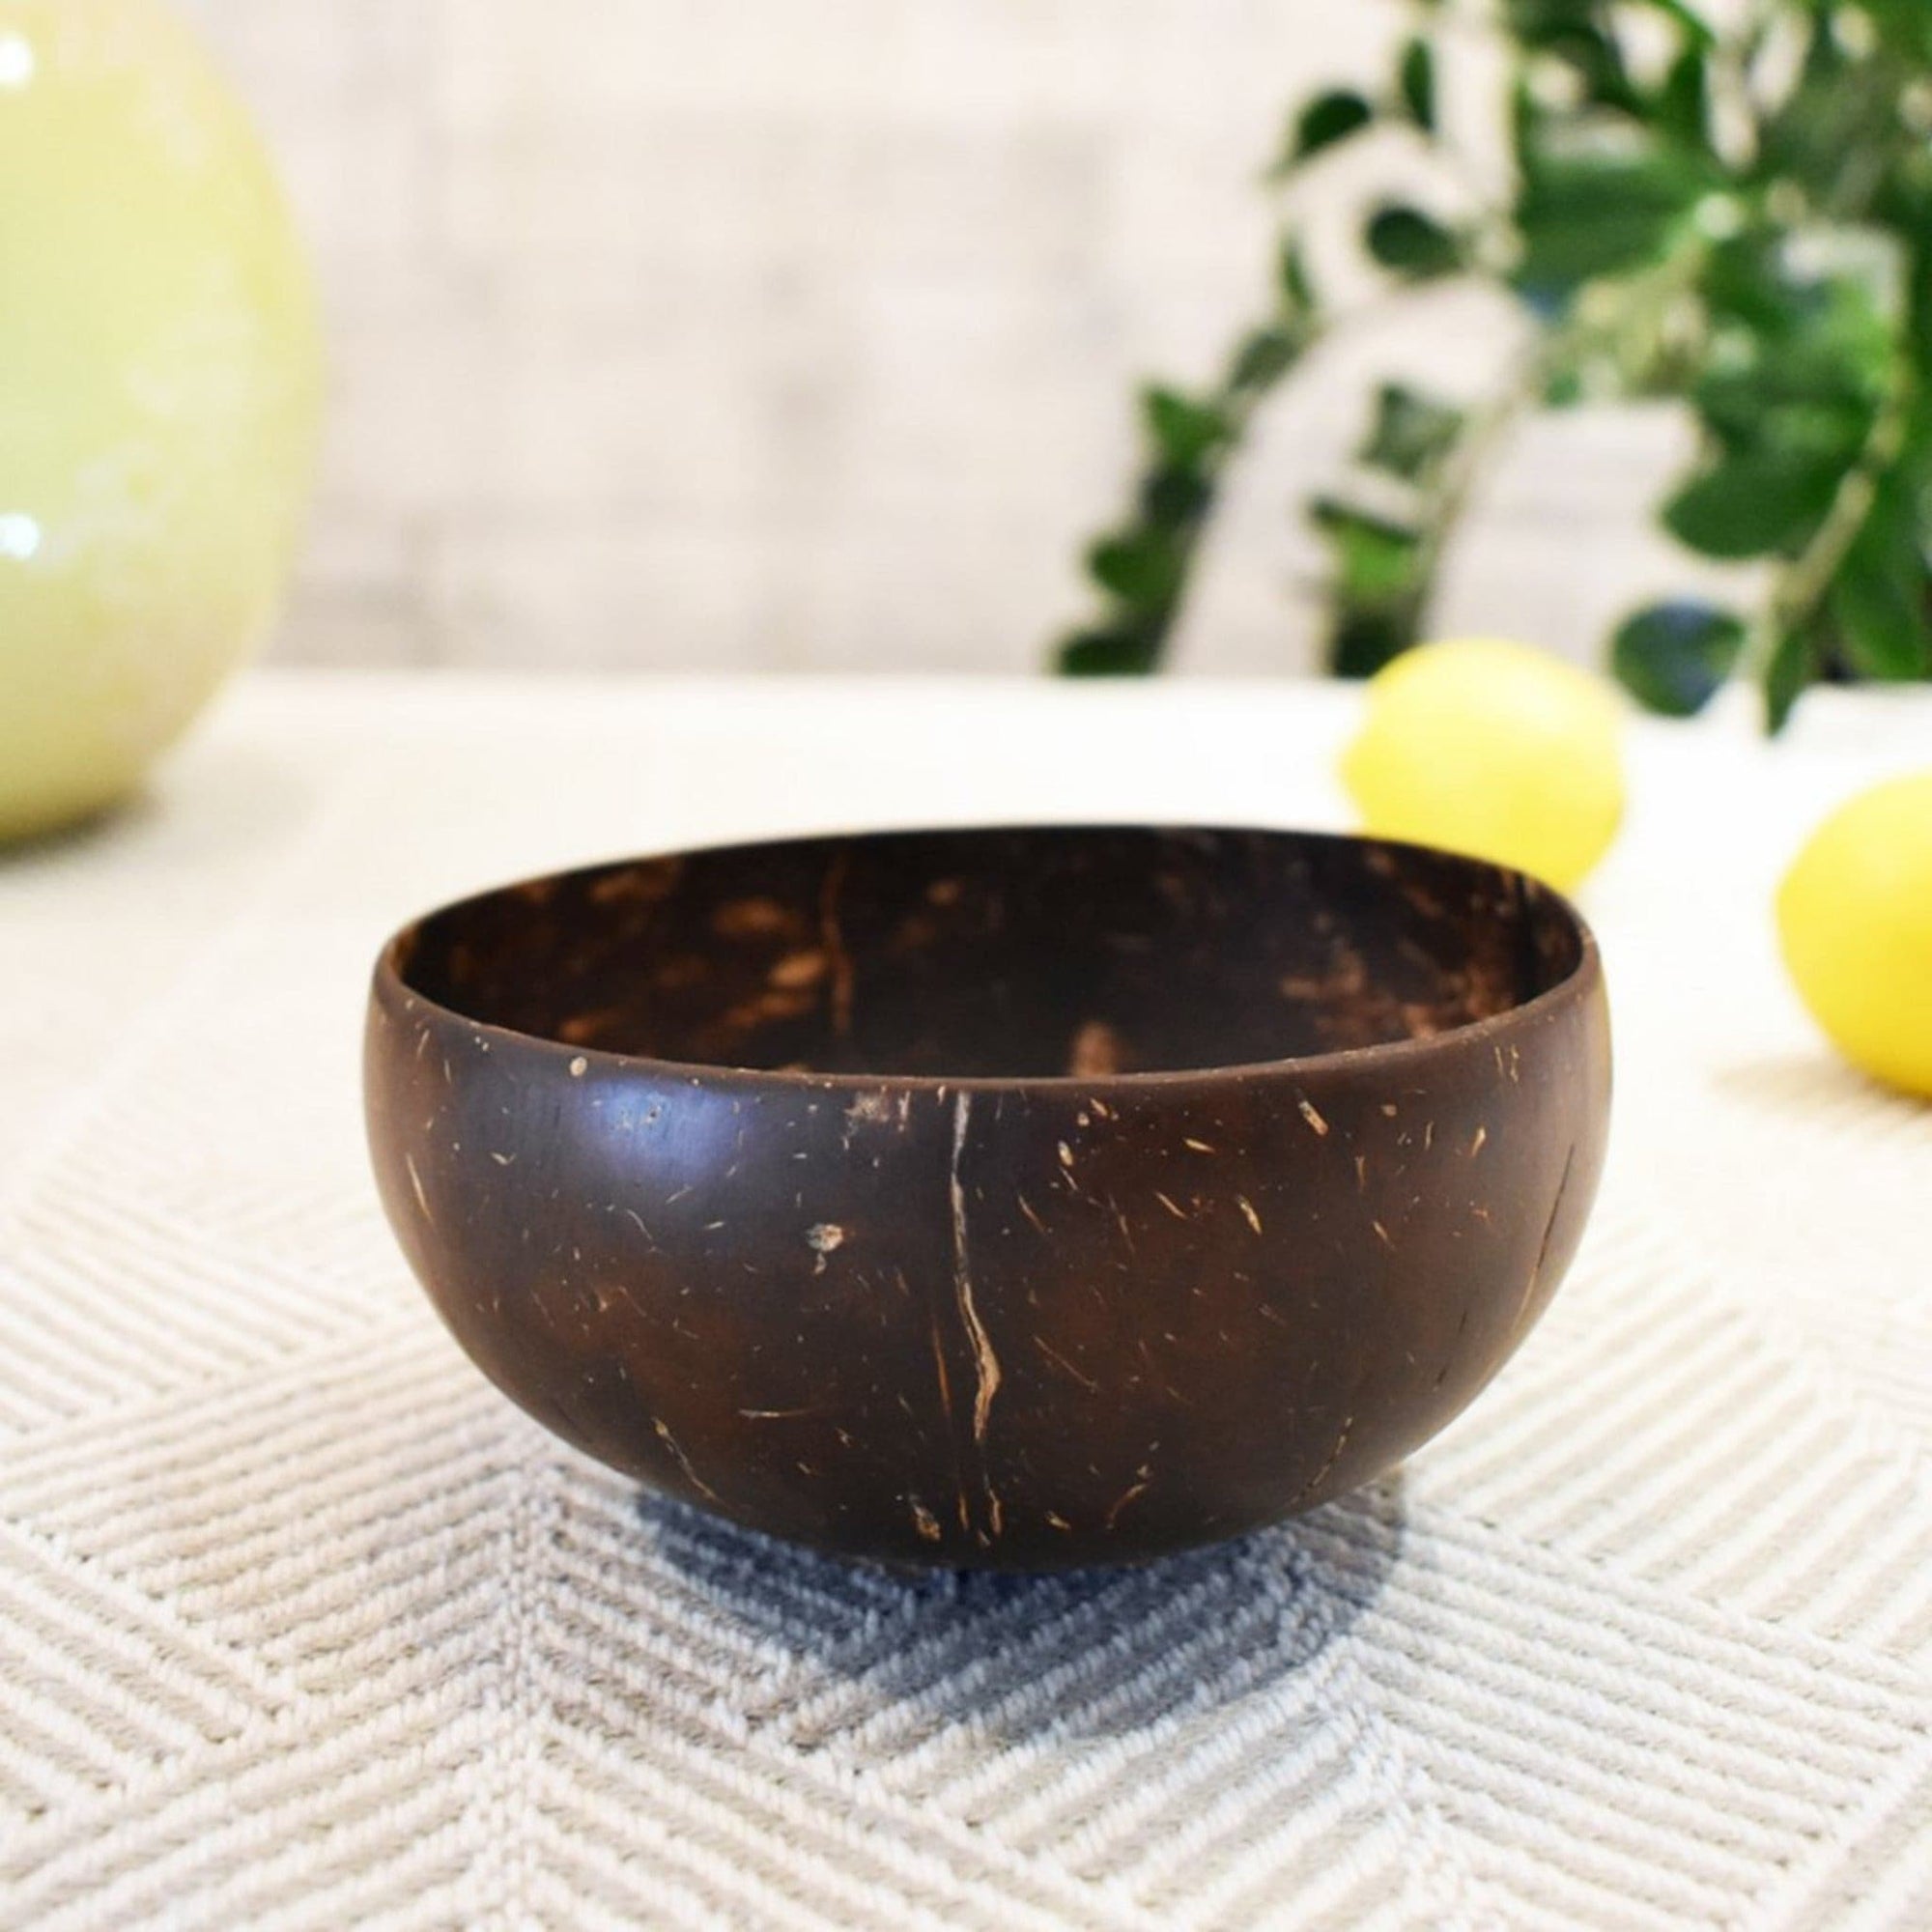 Simply Amazing | Coconut Bowl.